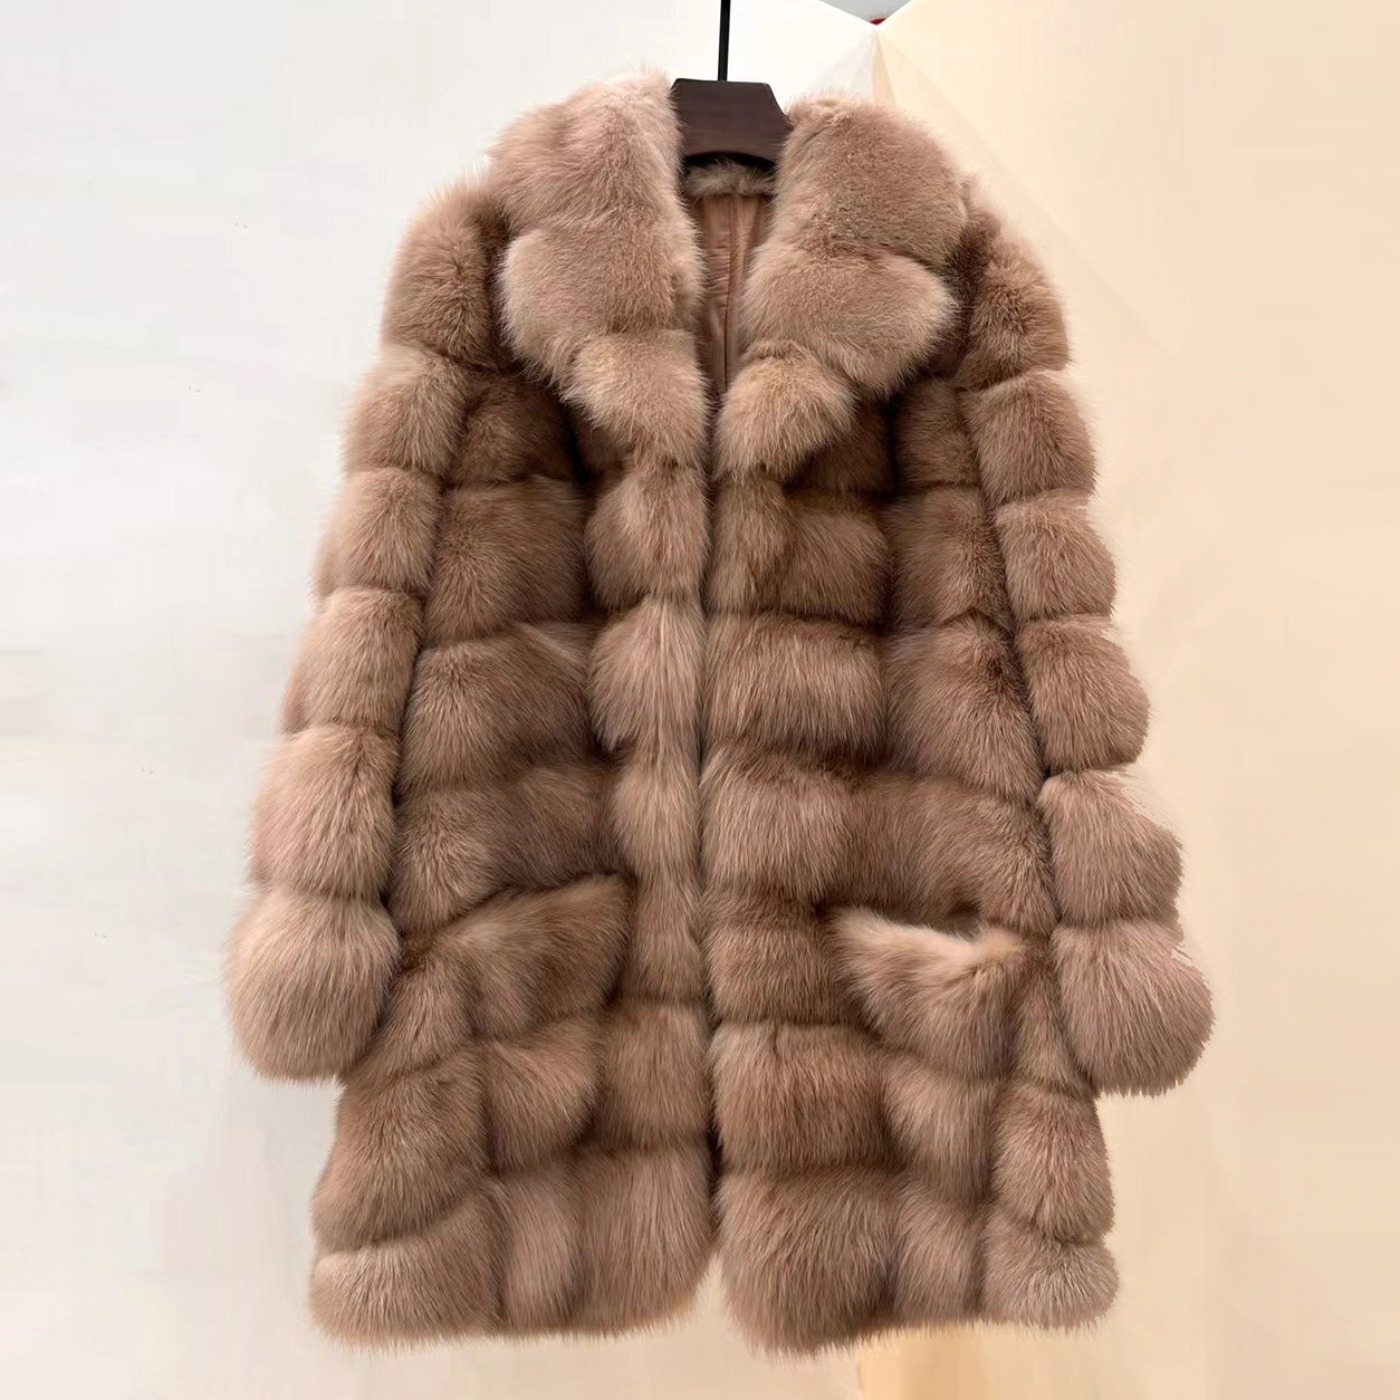 Premium Russian-sable coat